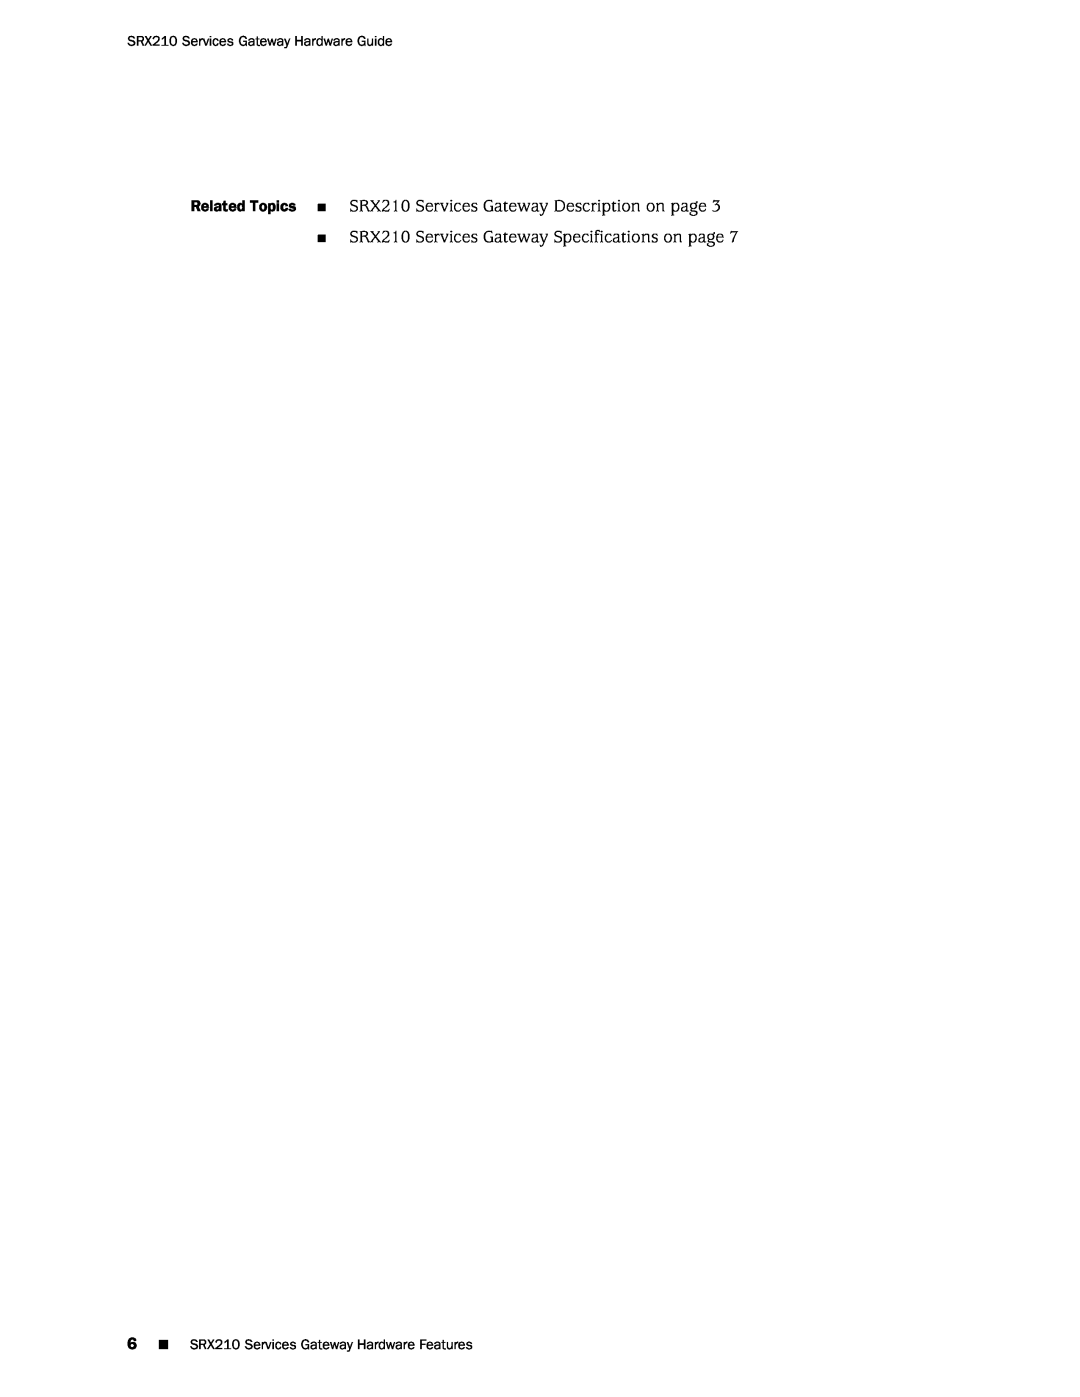 Juniper Networks SRX 210 manual Related Topics SRX210 Services Gateway Description on page 